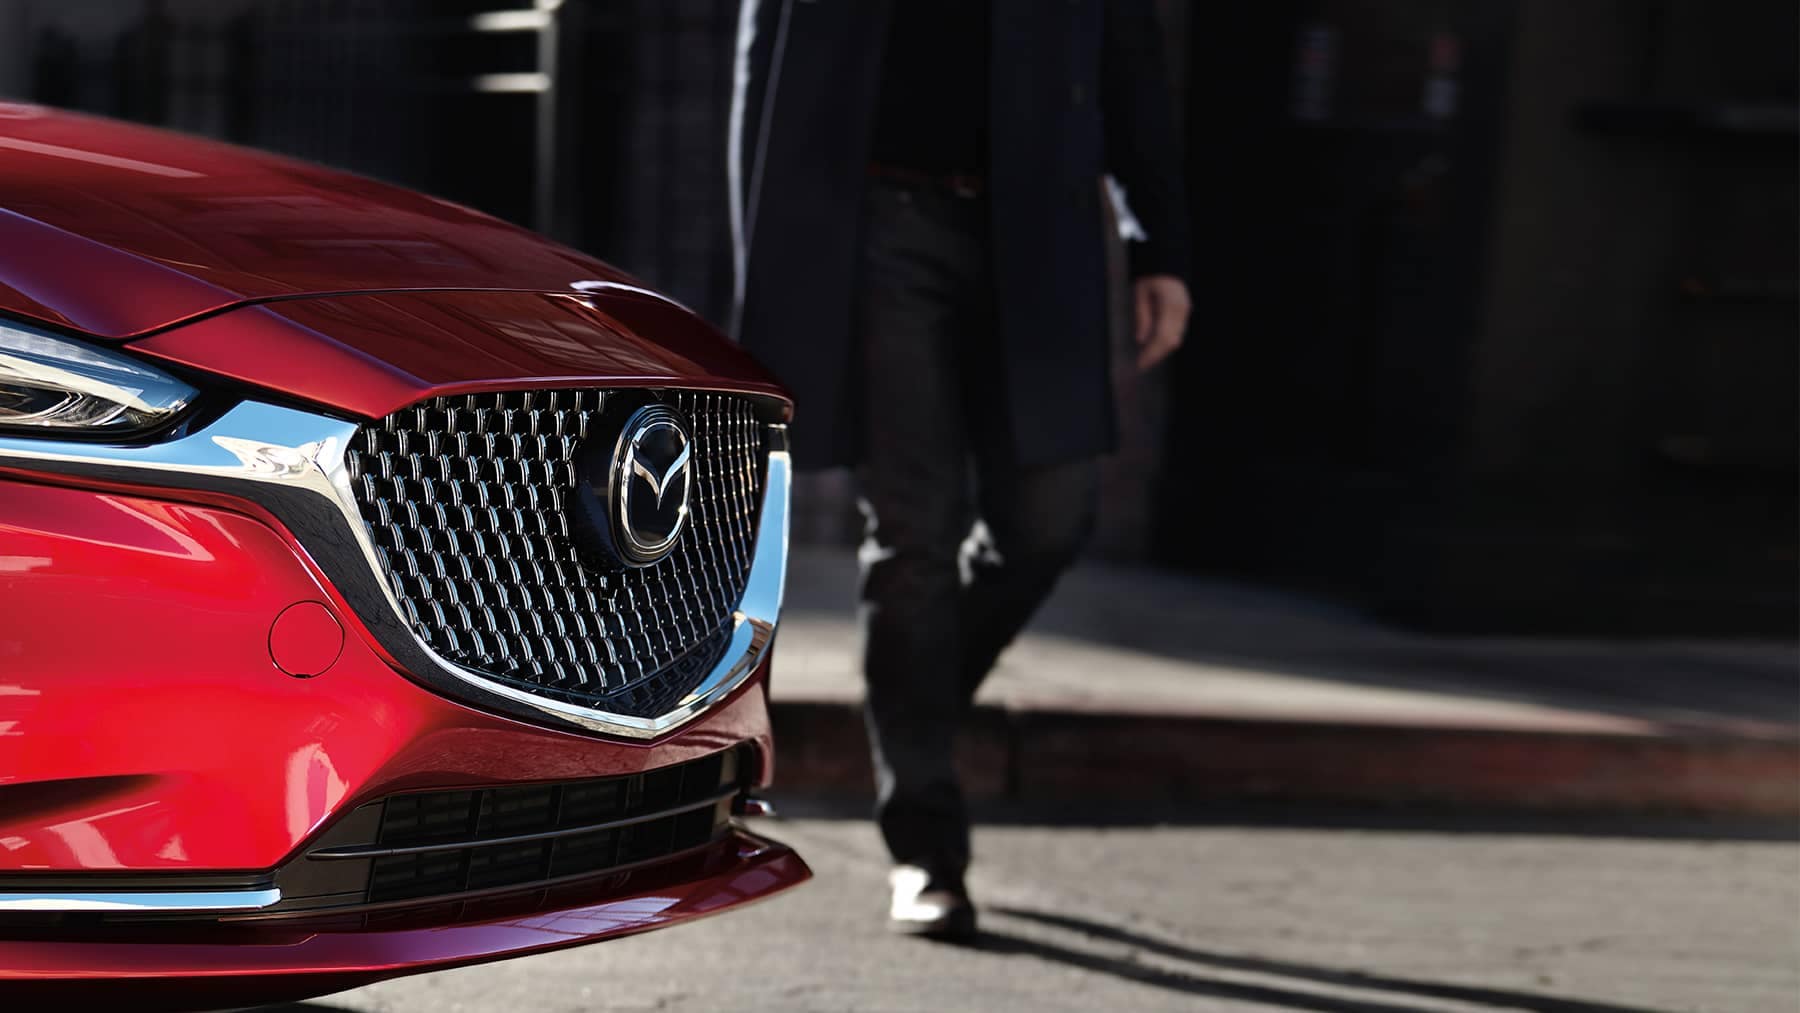 2020 Mazda 6 Sports Sedan Front Grille Closeup with Man Walking Behind